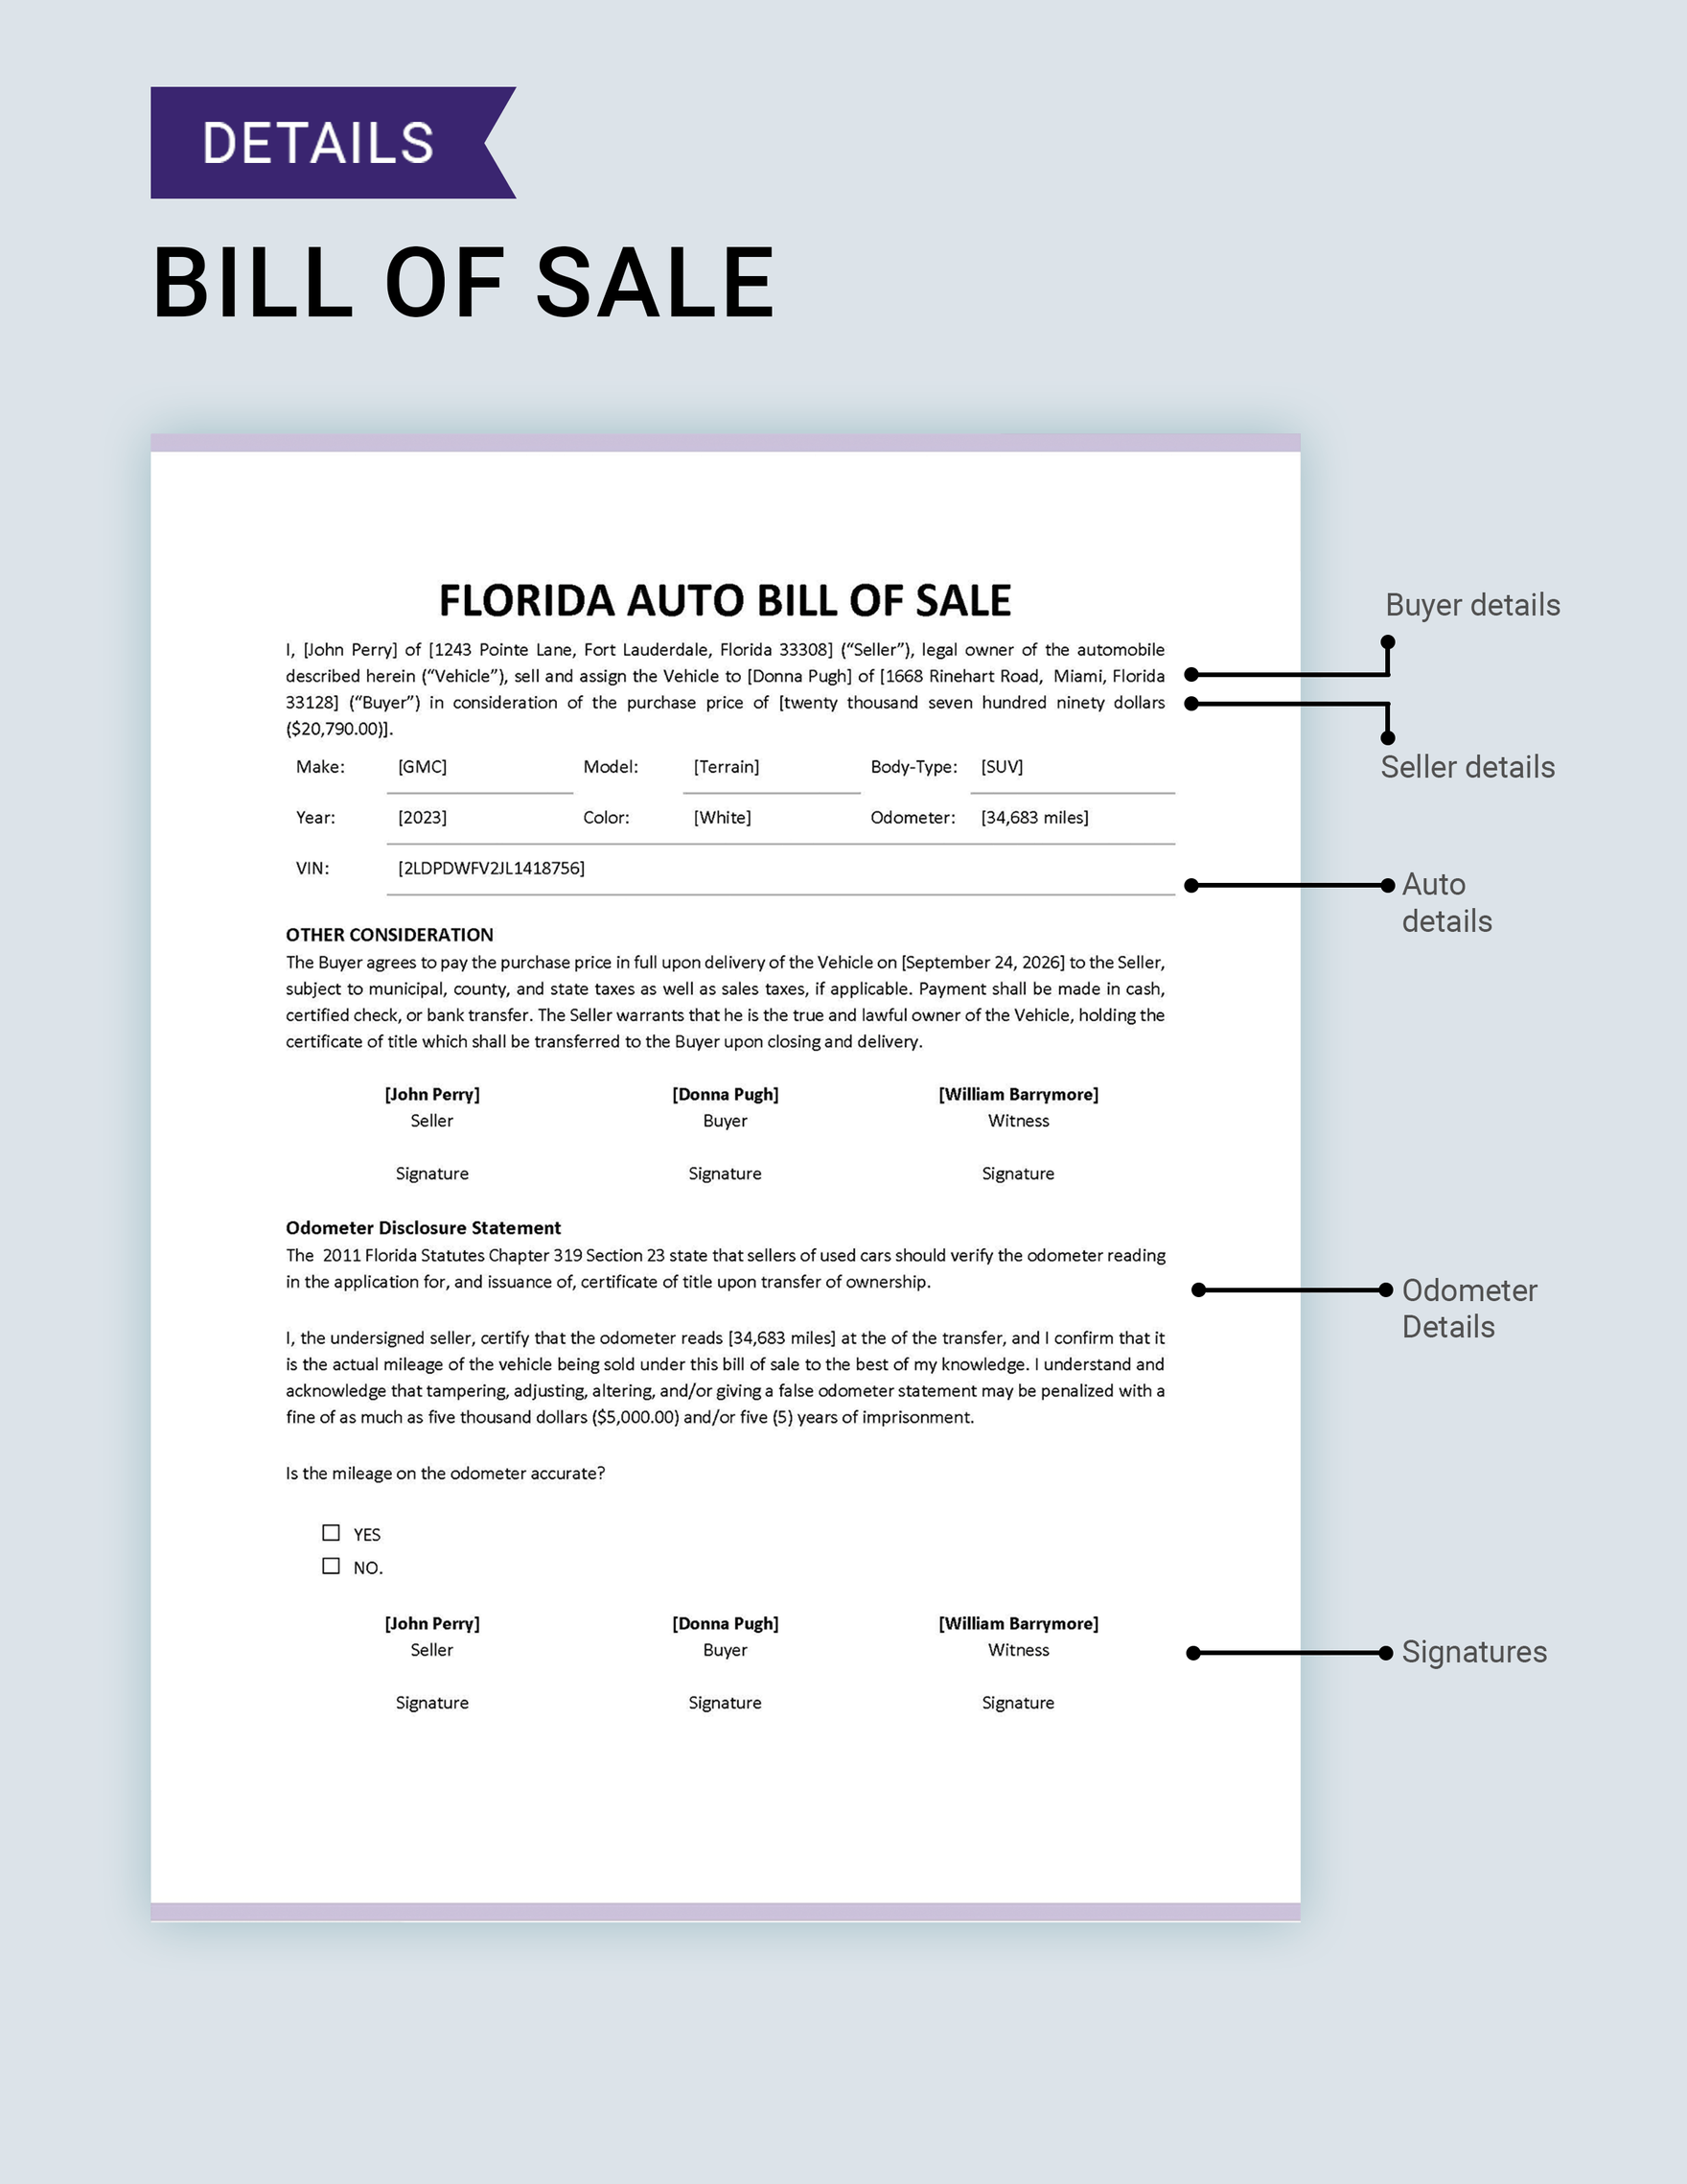 Florida Auto Bill of Sale Template